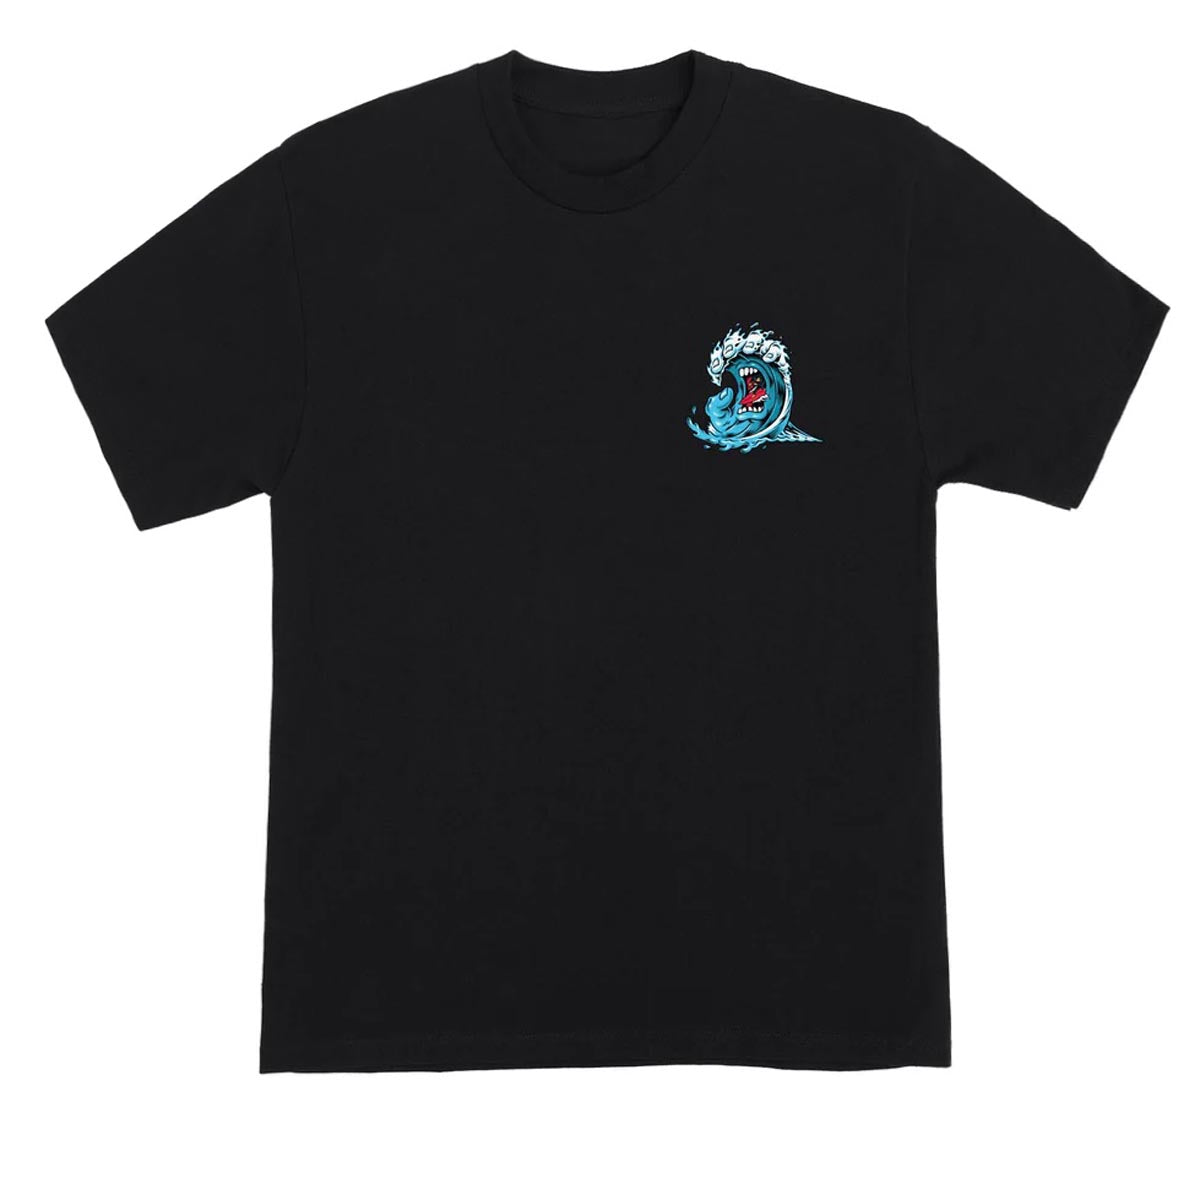 Santa Cruz Screaming Wave T-Shirt - Black image 2